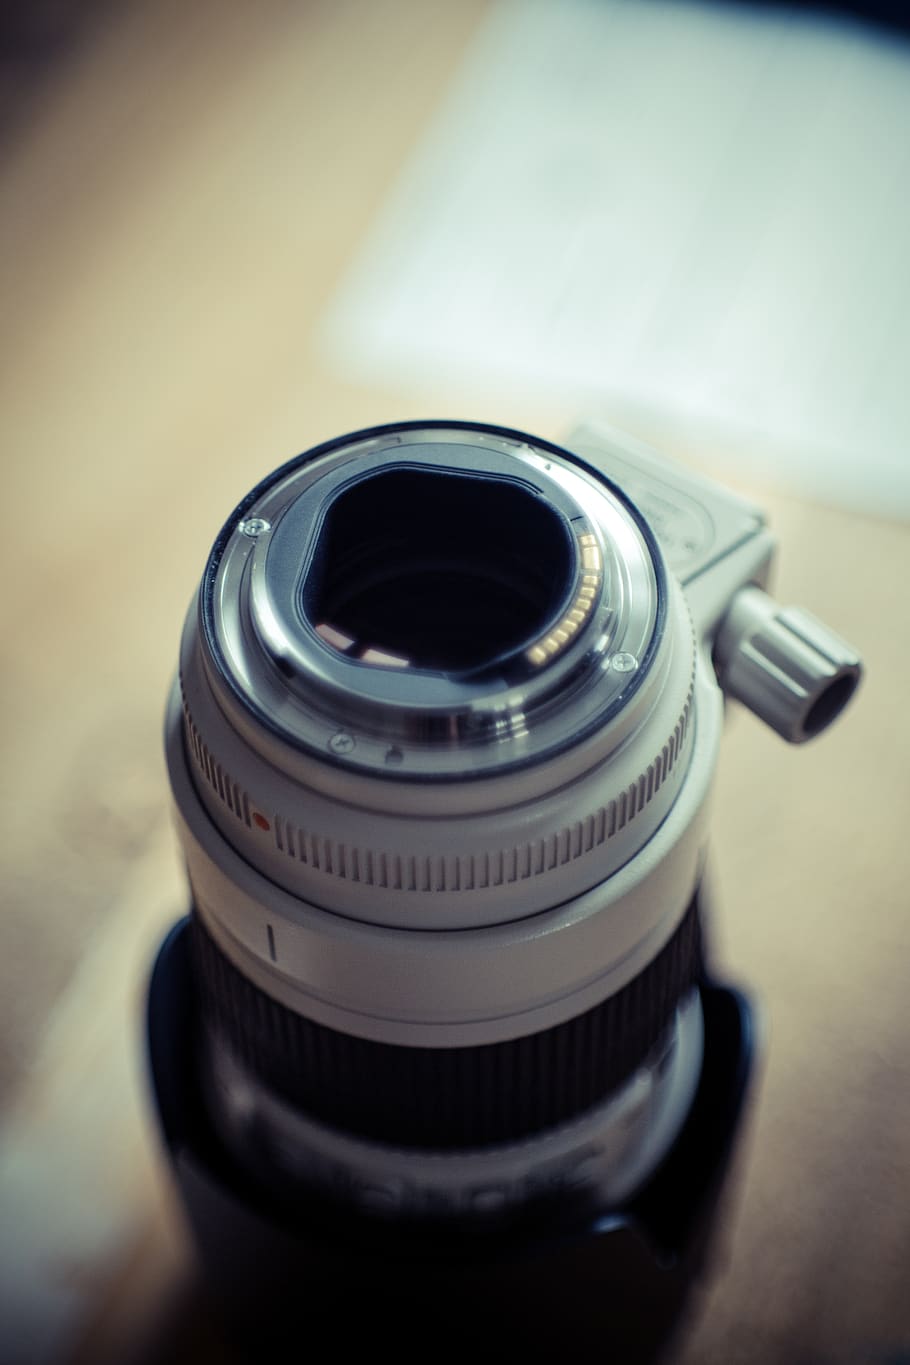 camera, lens, black, silver, photography, blur, photography themes, technology, camera - photographic equipment, lens - optical instrument